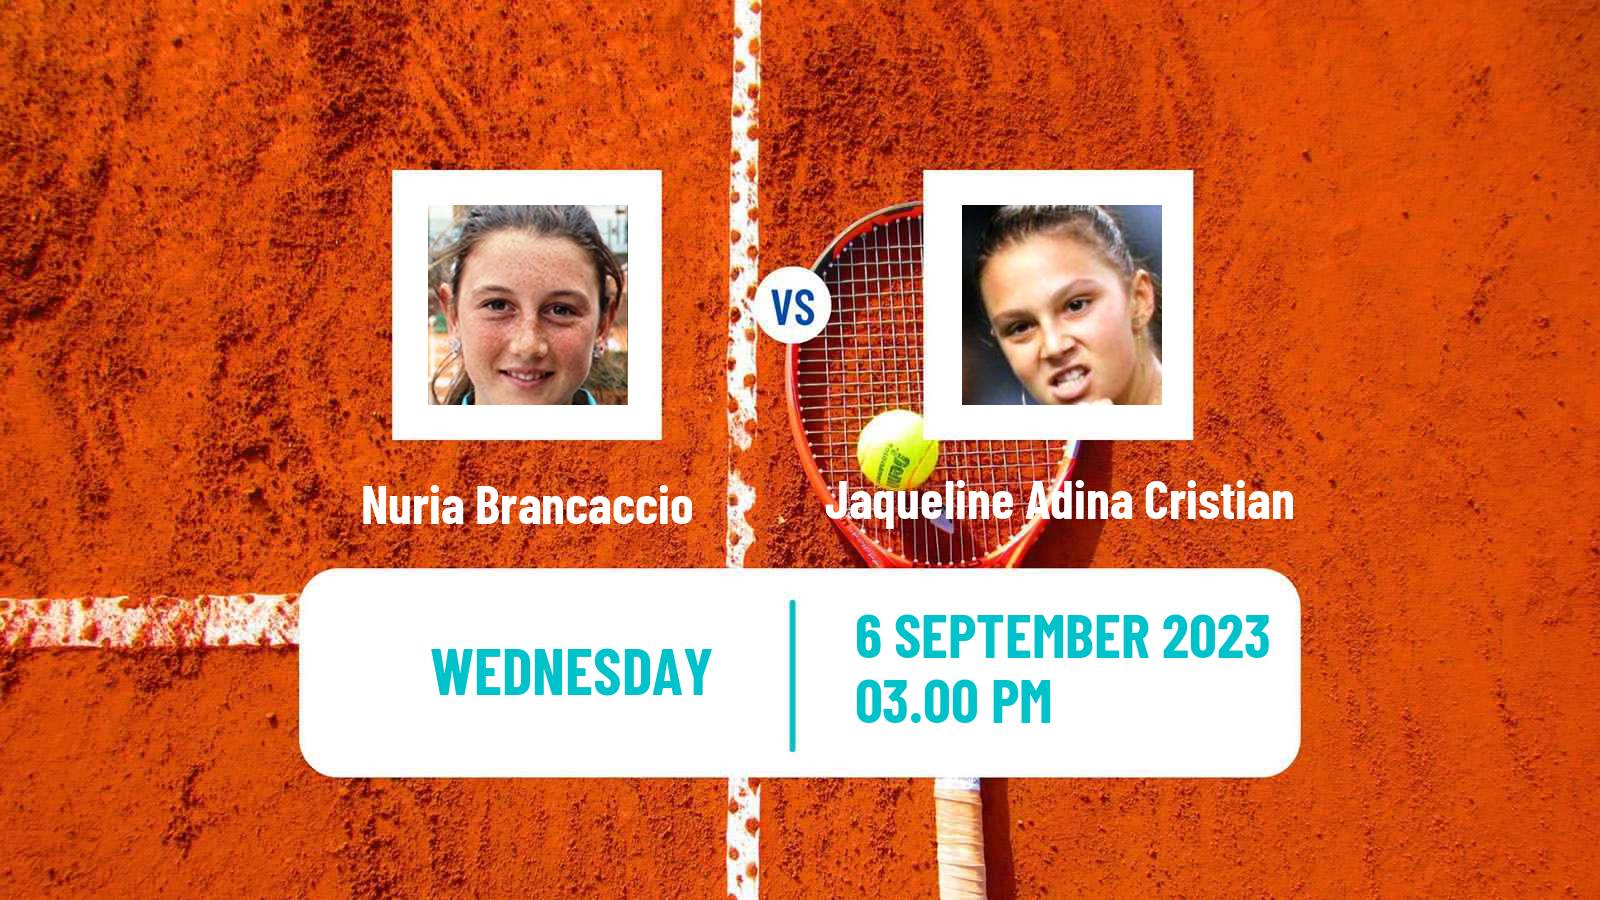 Tennis Bari Challenger Women Nuria Brancaccio - Jaqueline Adina Cristian